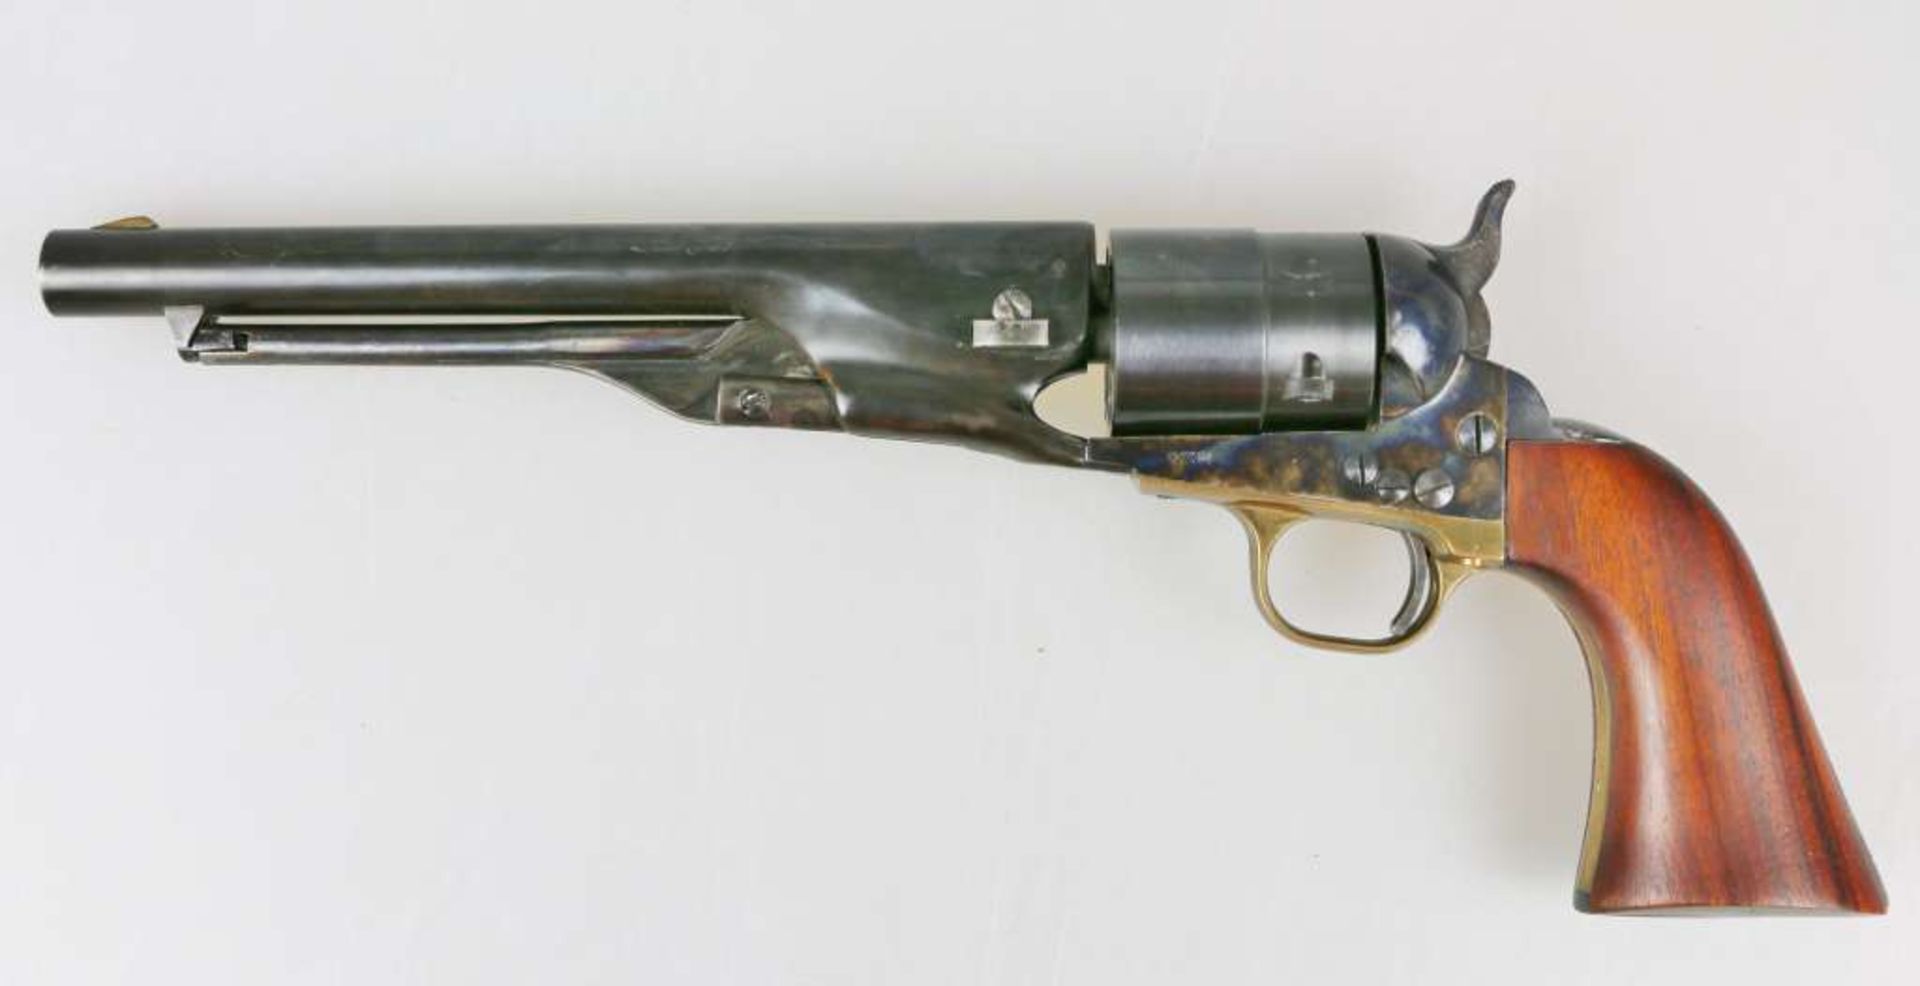 Neumann COLT M 1860 Army Revolver im Kal. 9 mm Knall, PTB 246. Edler Holzschaft, Abzugsbügel und